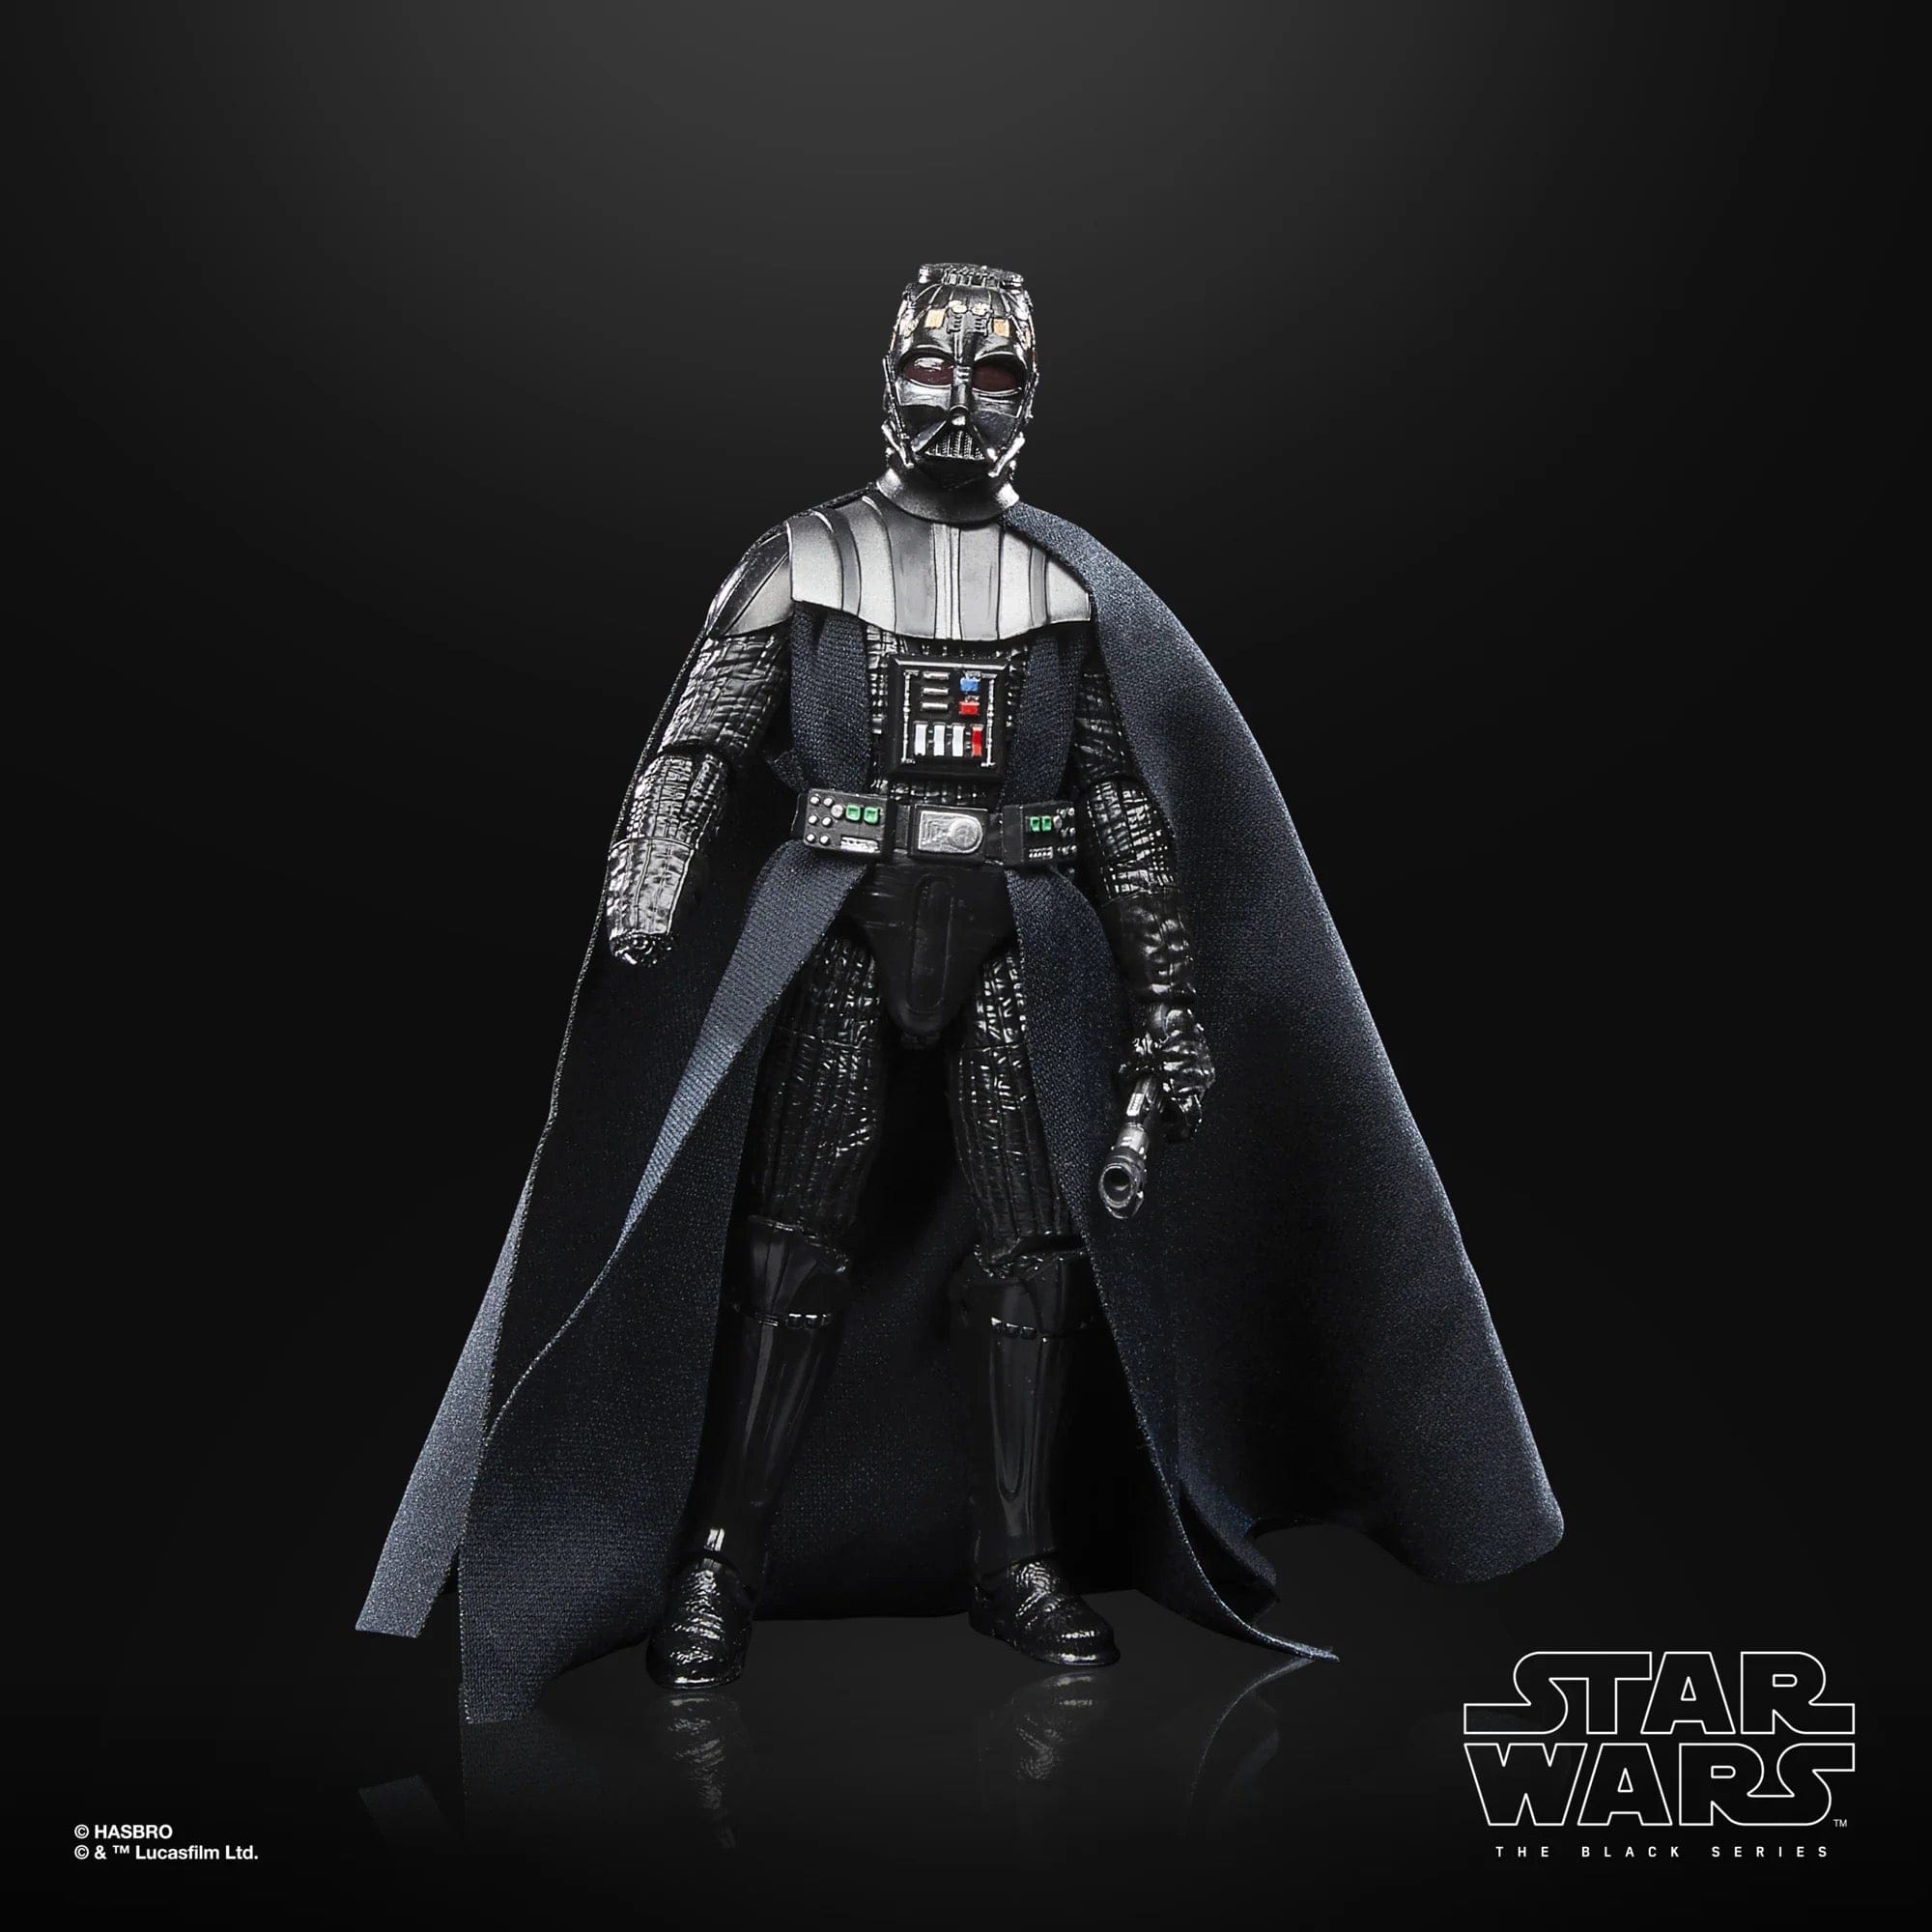 Hasbro Star Wars The Black Series Return of the Jedi 40th Anniversary Darth Vader Action Figure